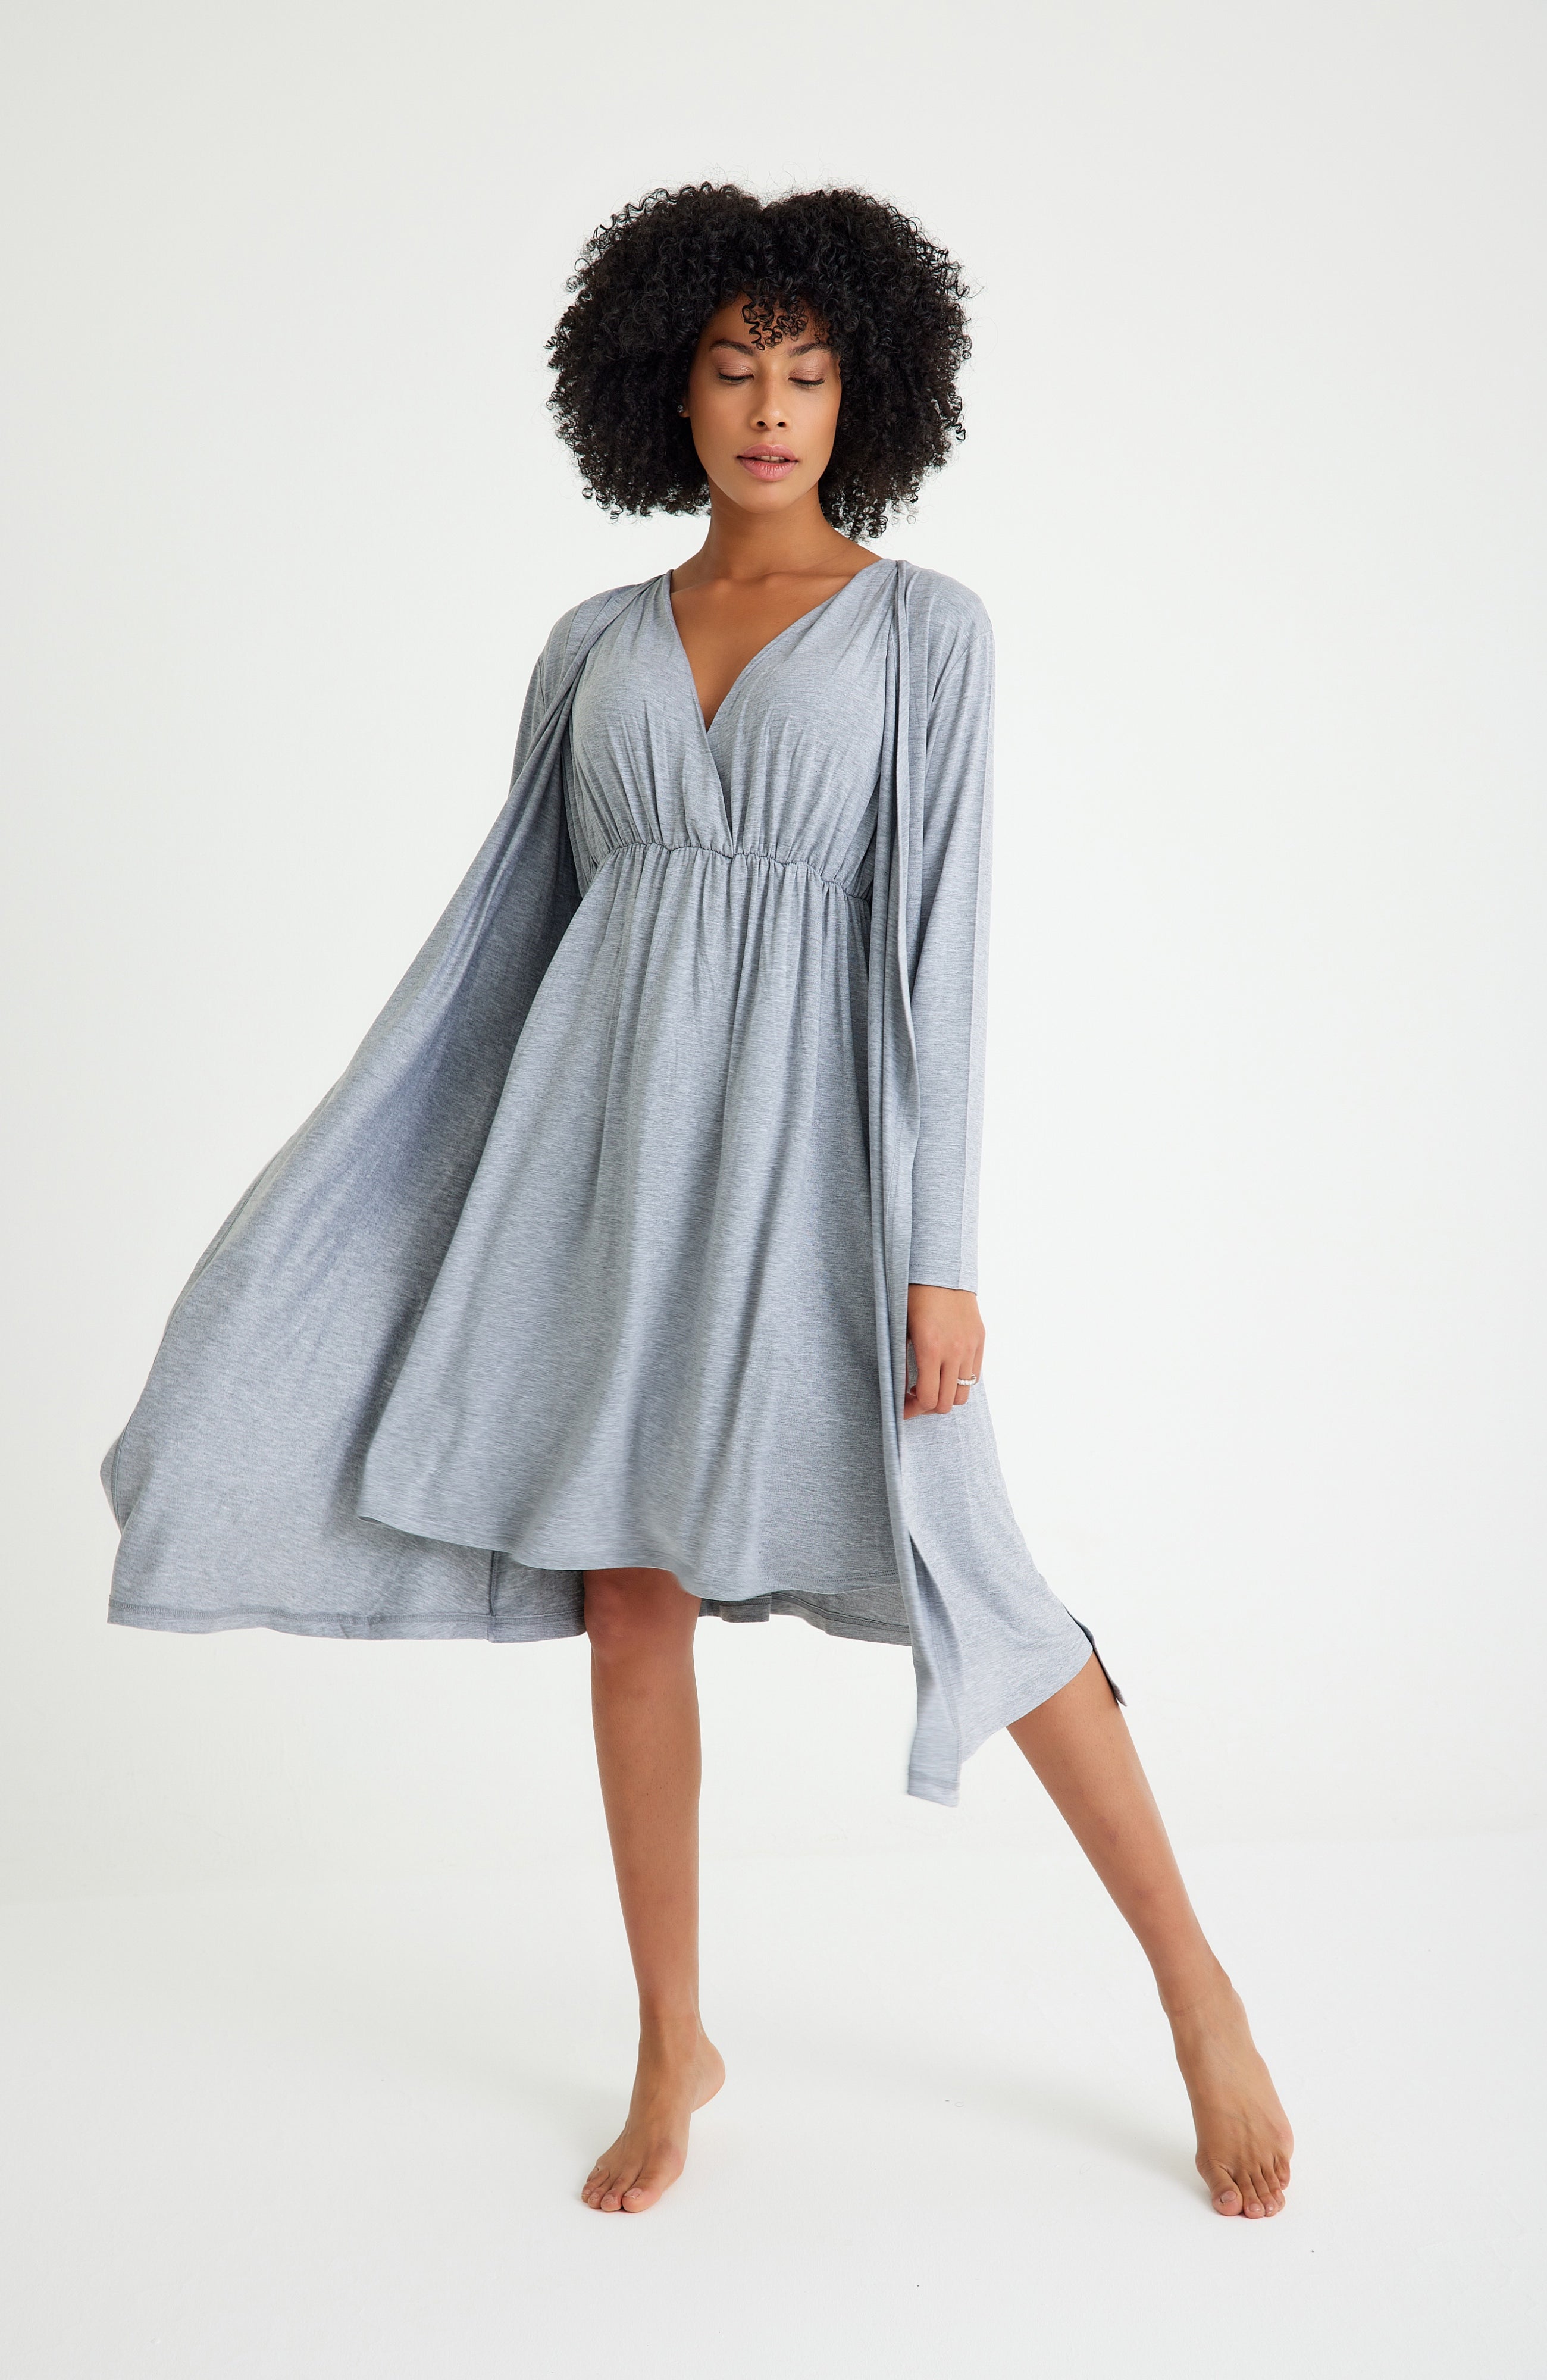 Sleep Well Maternity/Nursing Nightgown & Robe Set